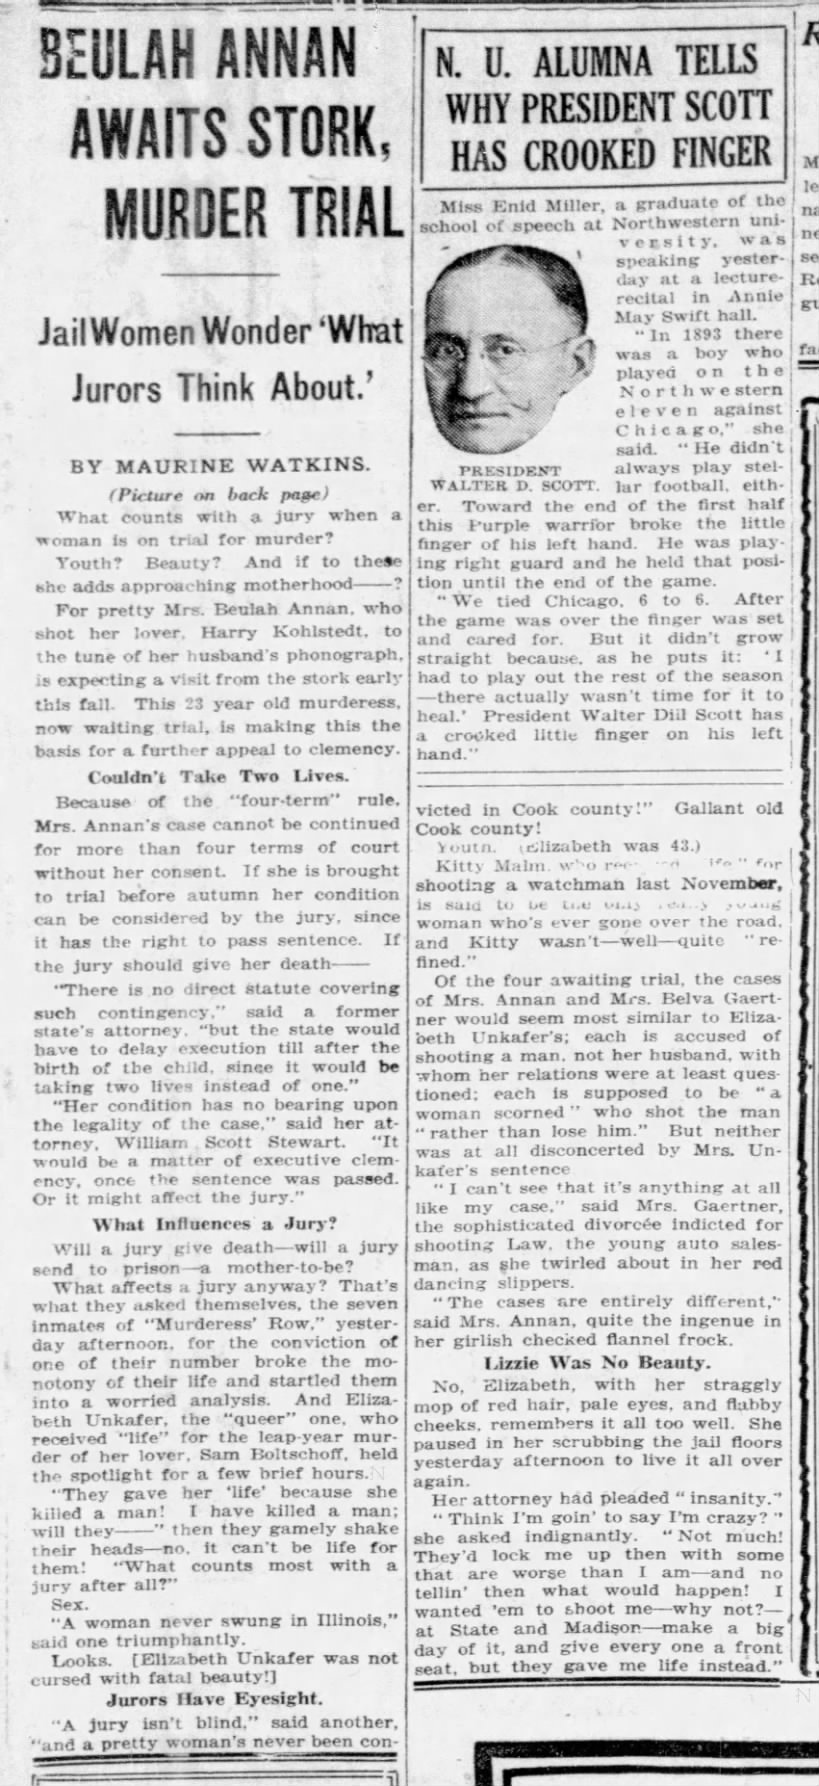 Maurine Watkins, 9 May 1924 "Beulah Annan Awaits Stork, Murder Trial"